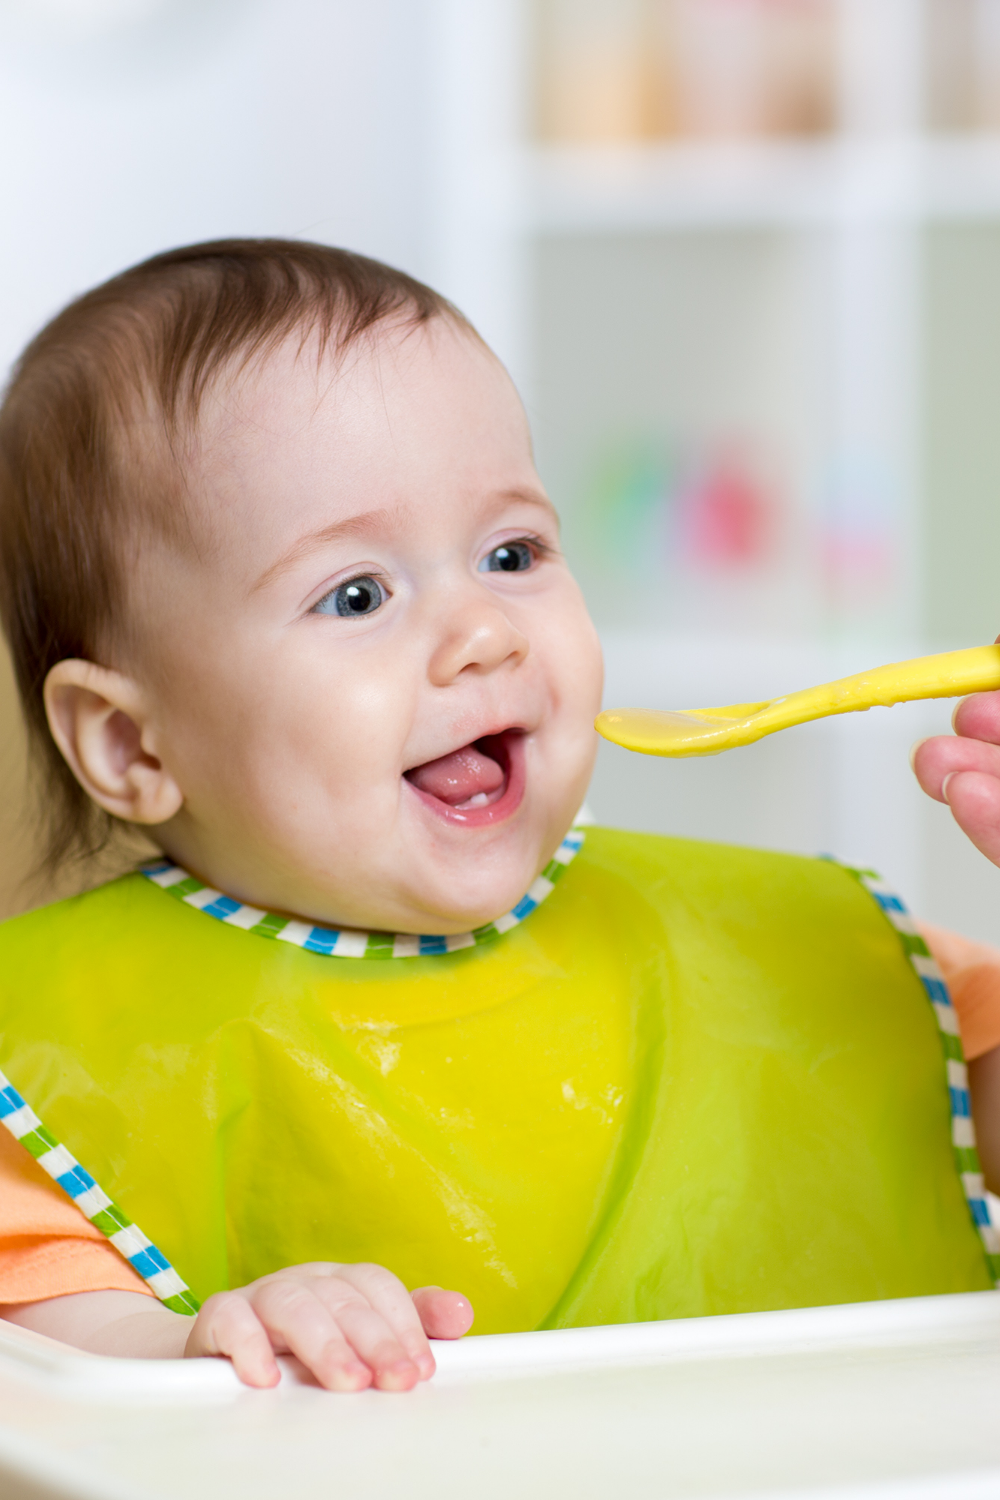 The Best Baby Feeding Supplies, Baby Talk